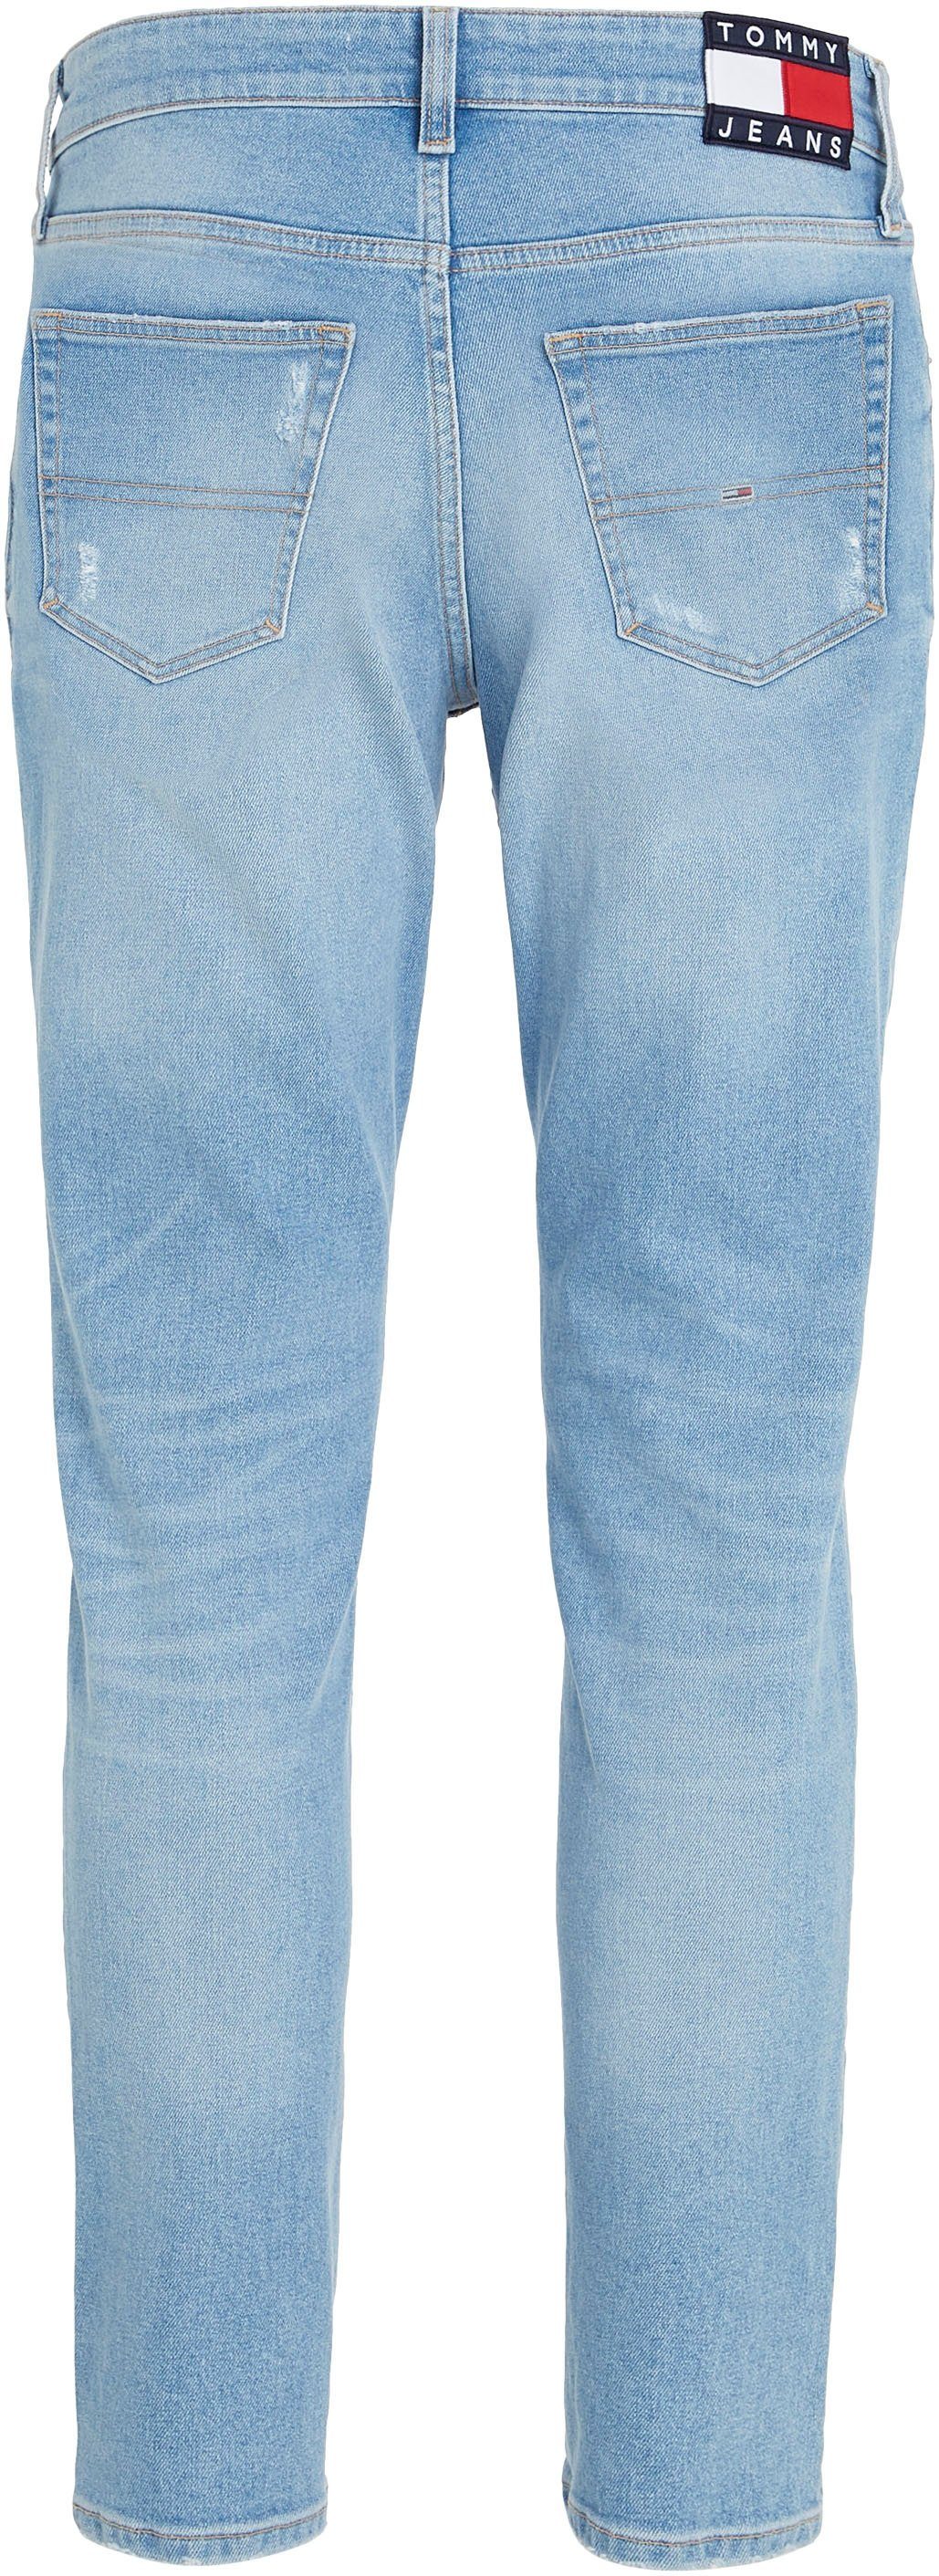 Slim-fit-Jeans BG7114 AUSTIN Tommy mit Markenlabel DenimLight SLIM Jeans TPRD